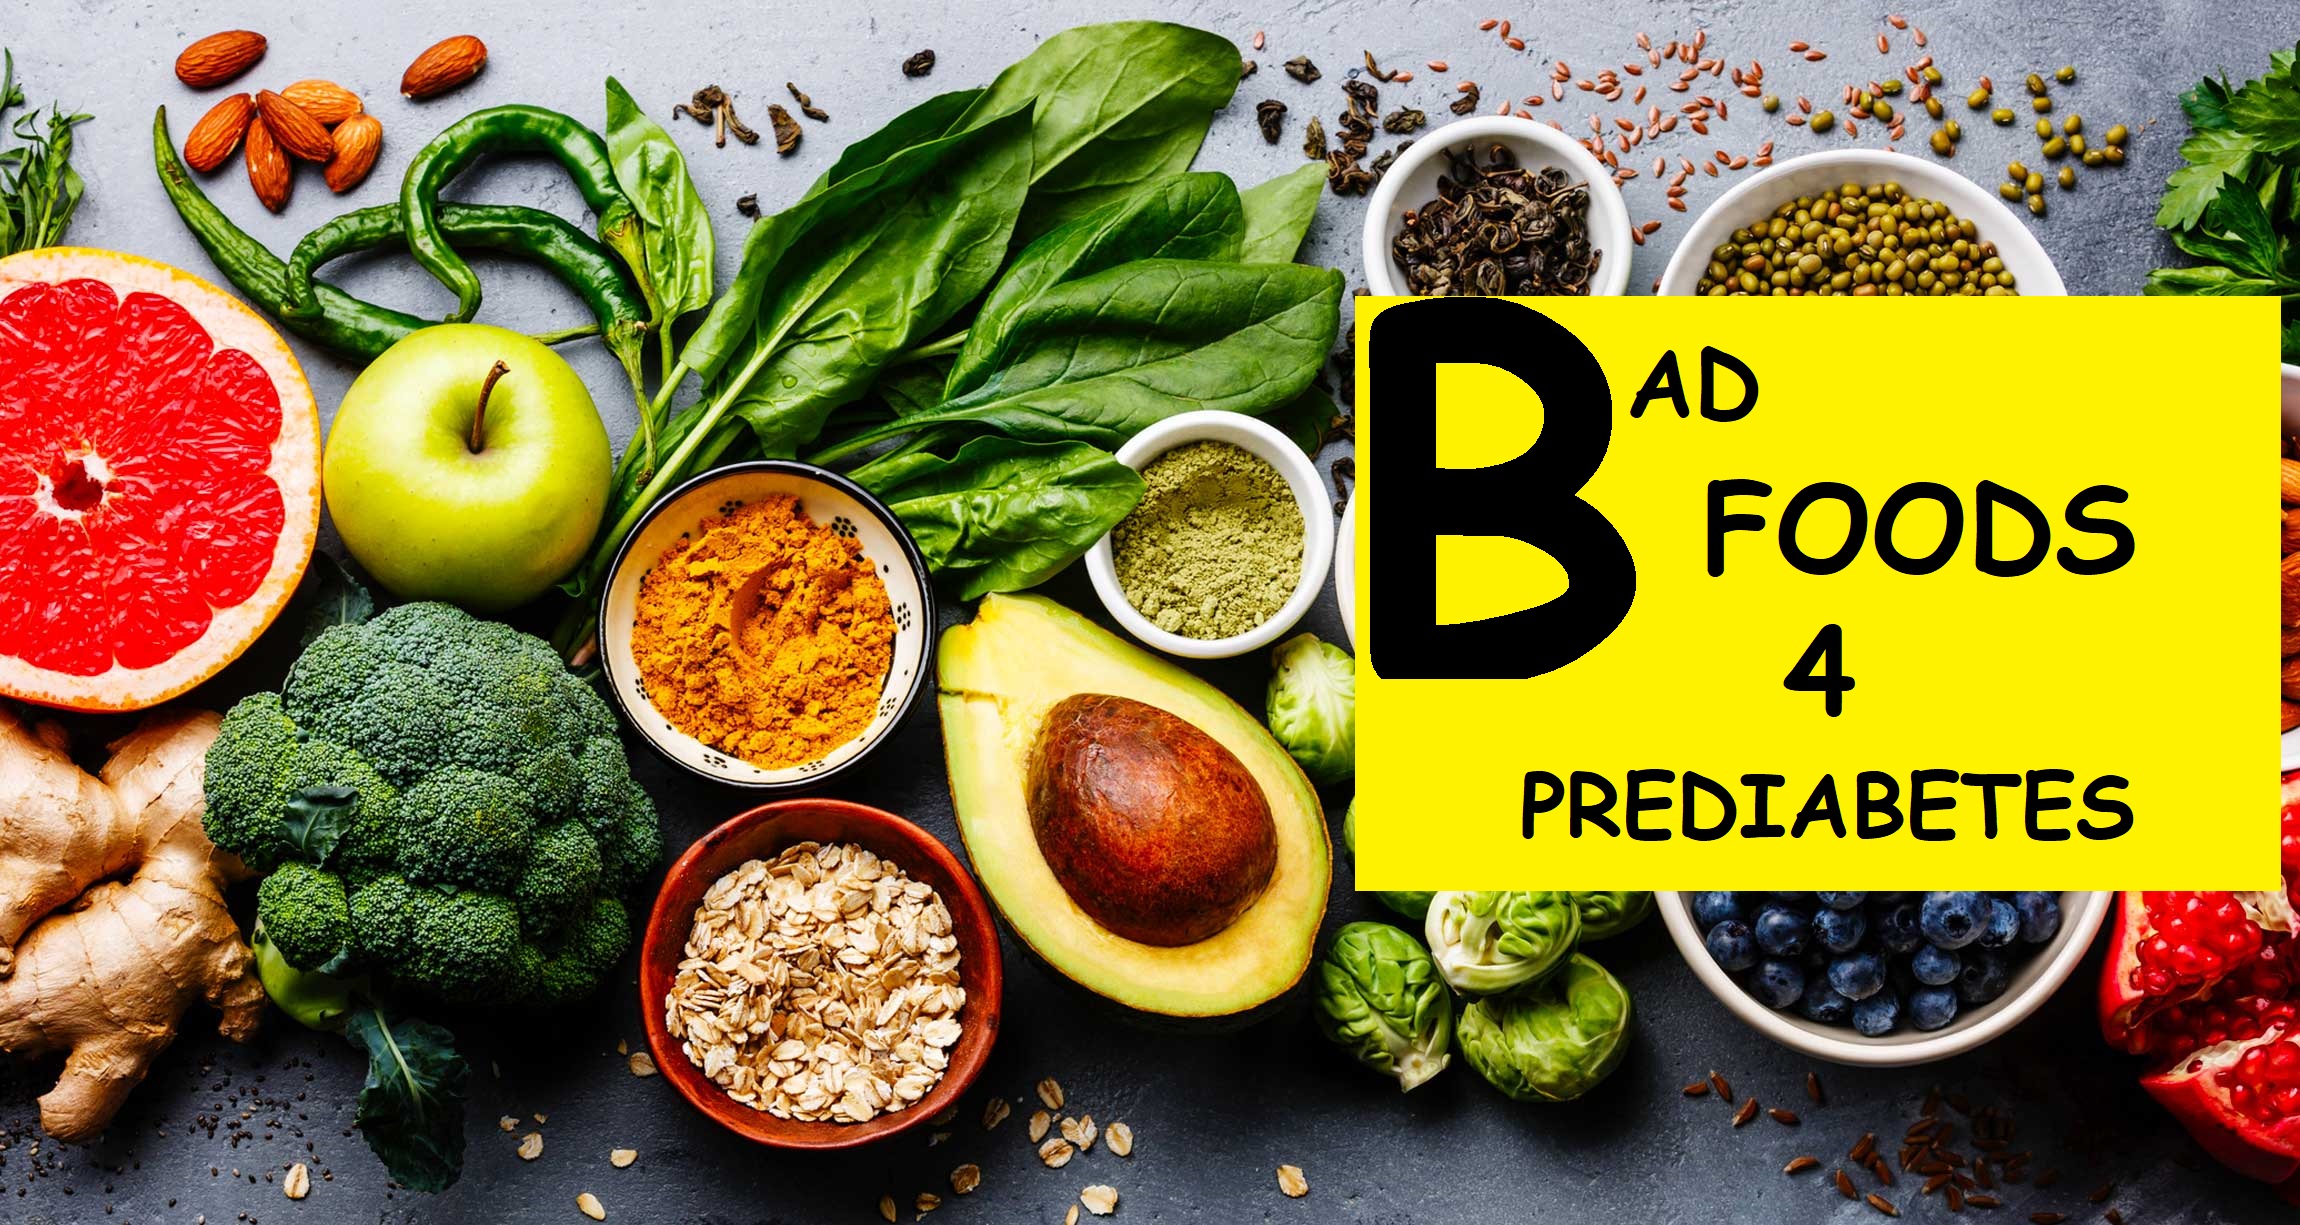 5 Common Bad Foods For Prediabetes Patients [2021 Update]